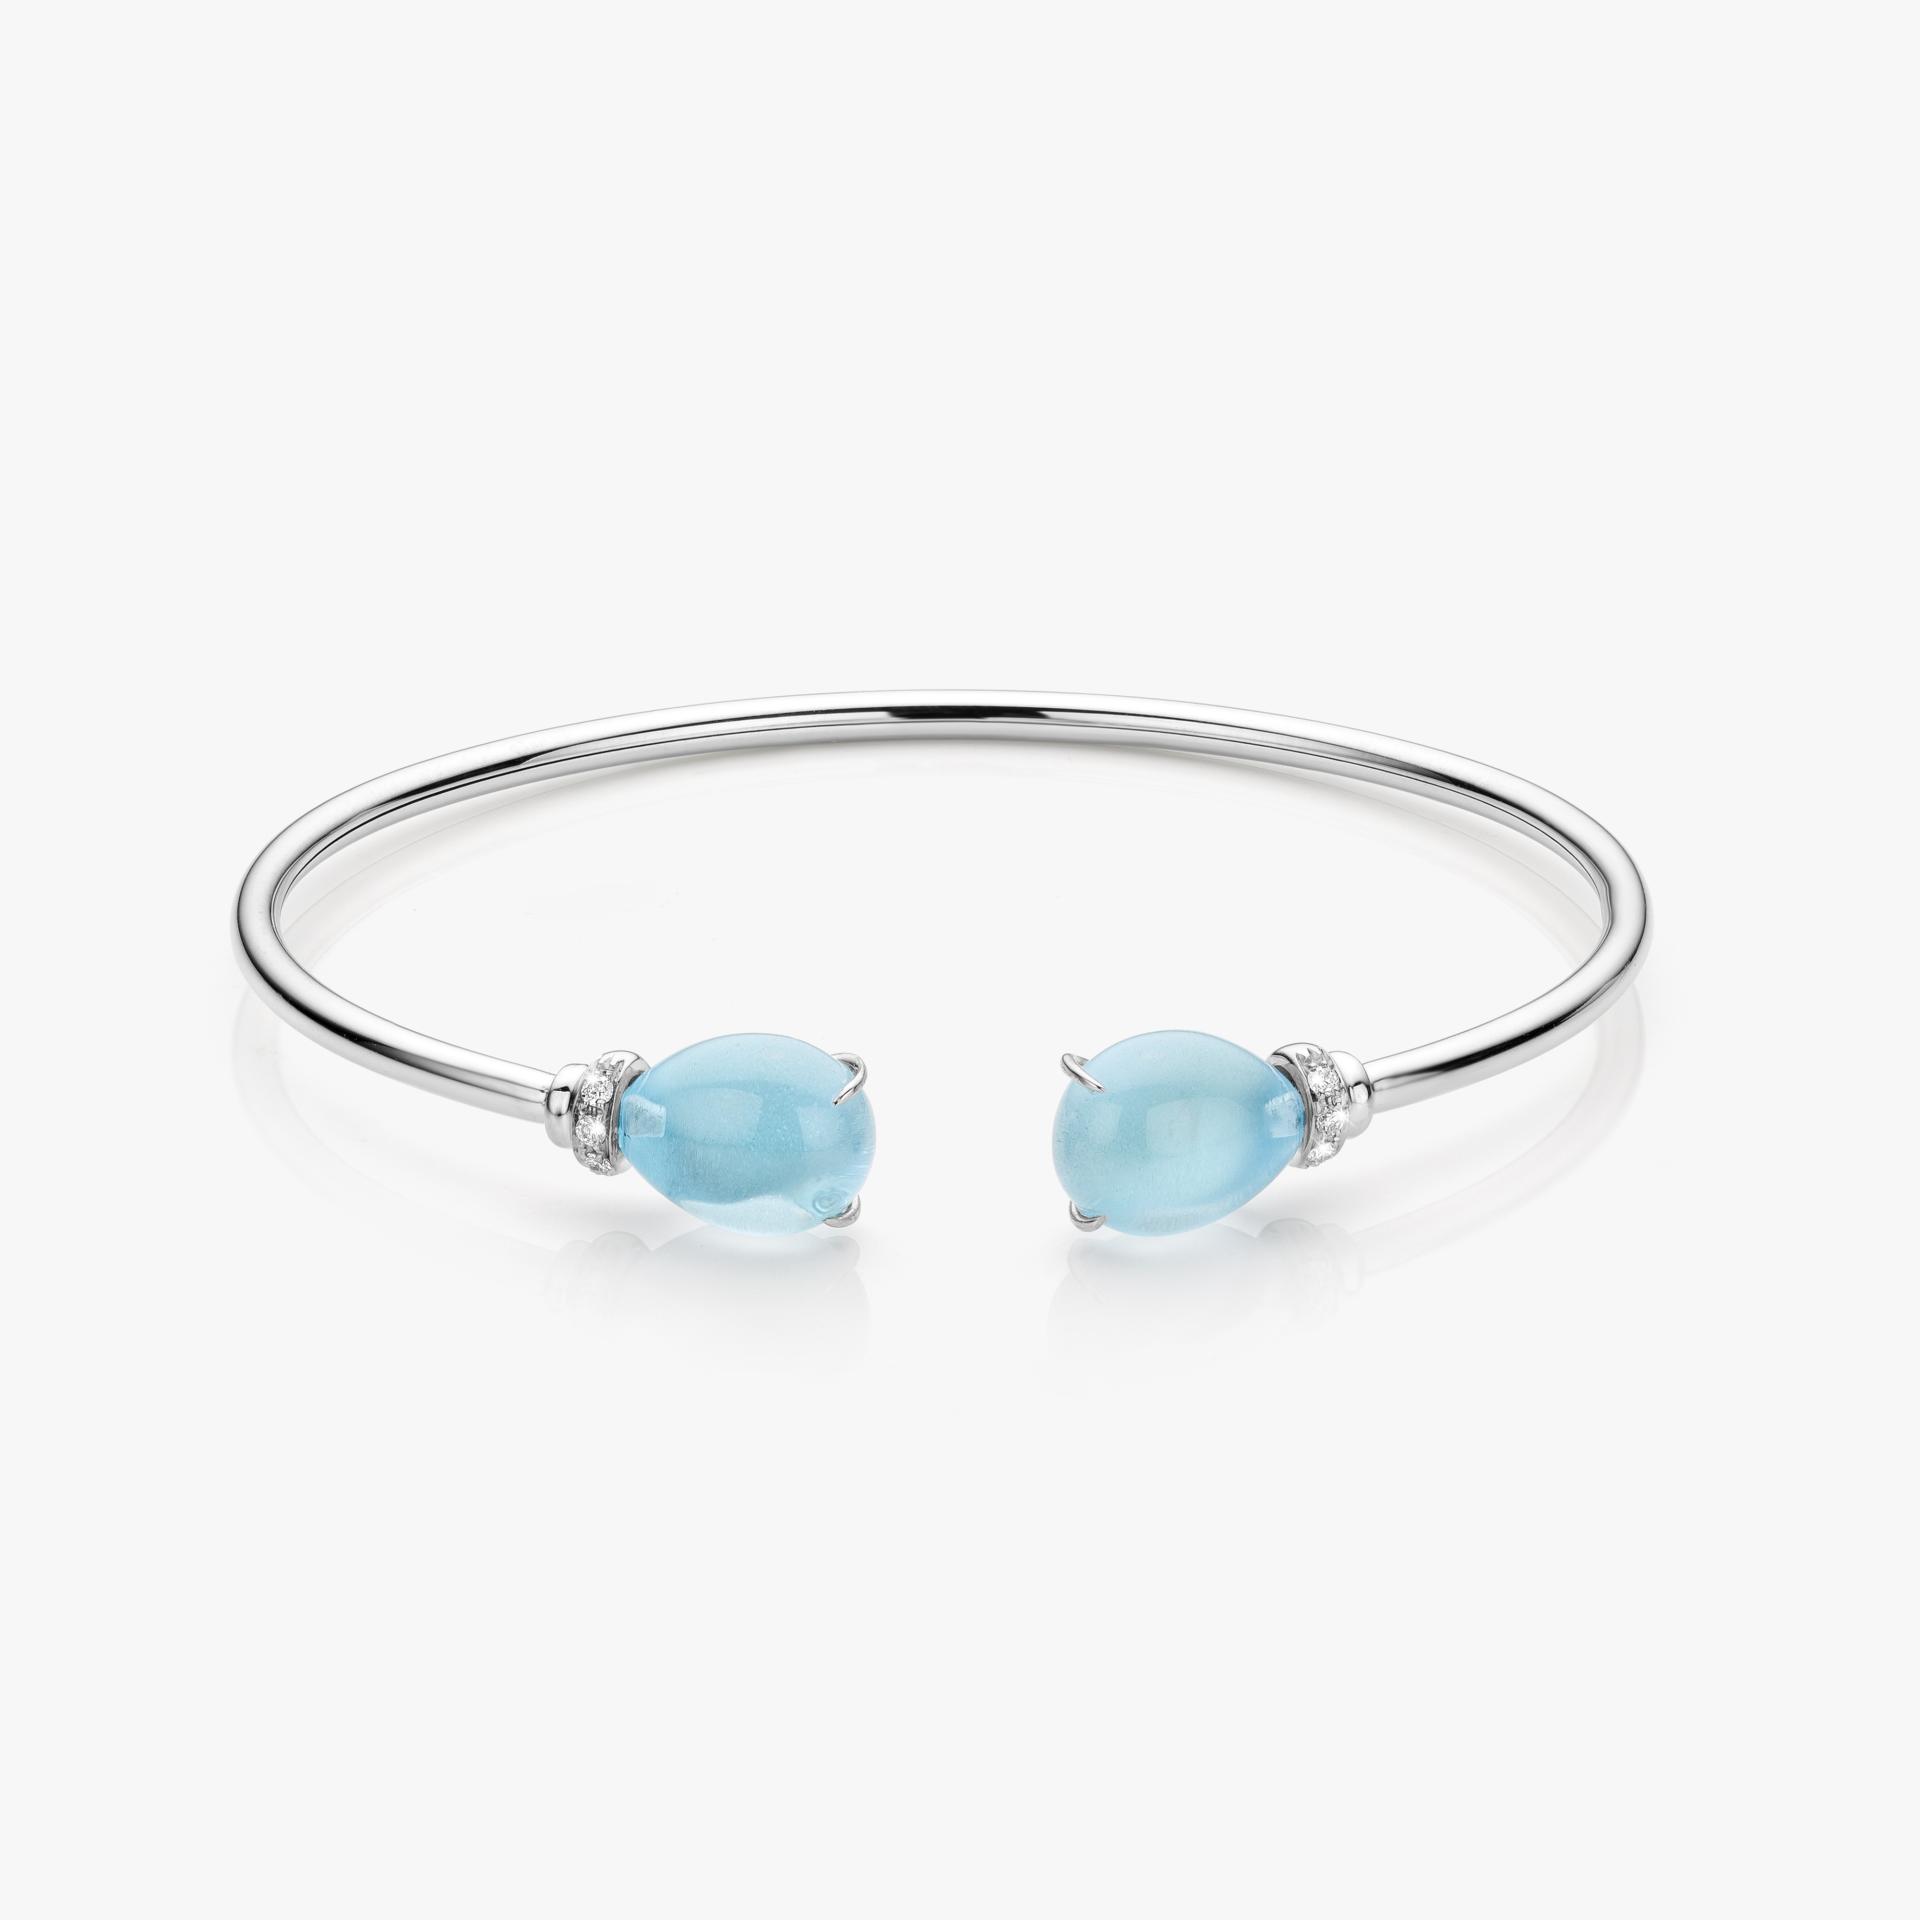 White gold bracelet set with blue topaz and brilliant cut diamonds made by Maison De Greef